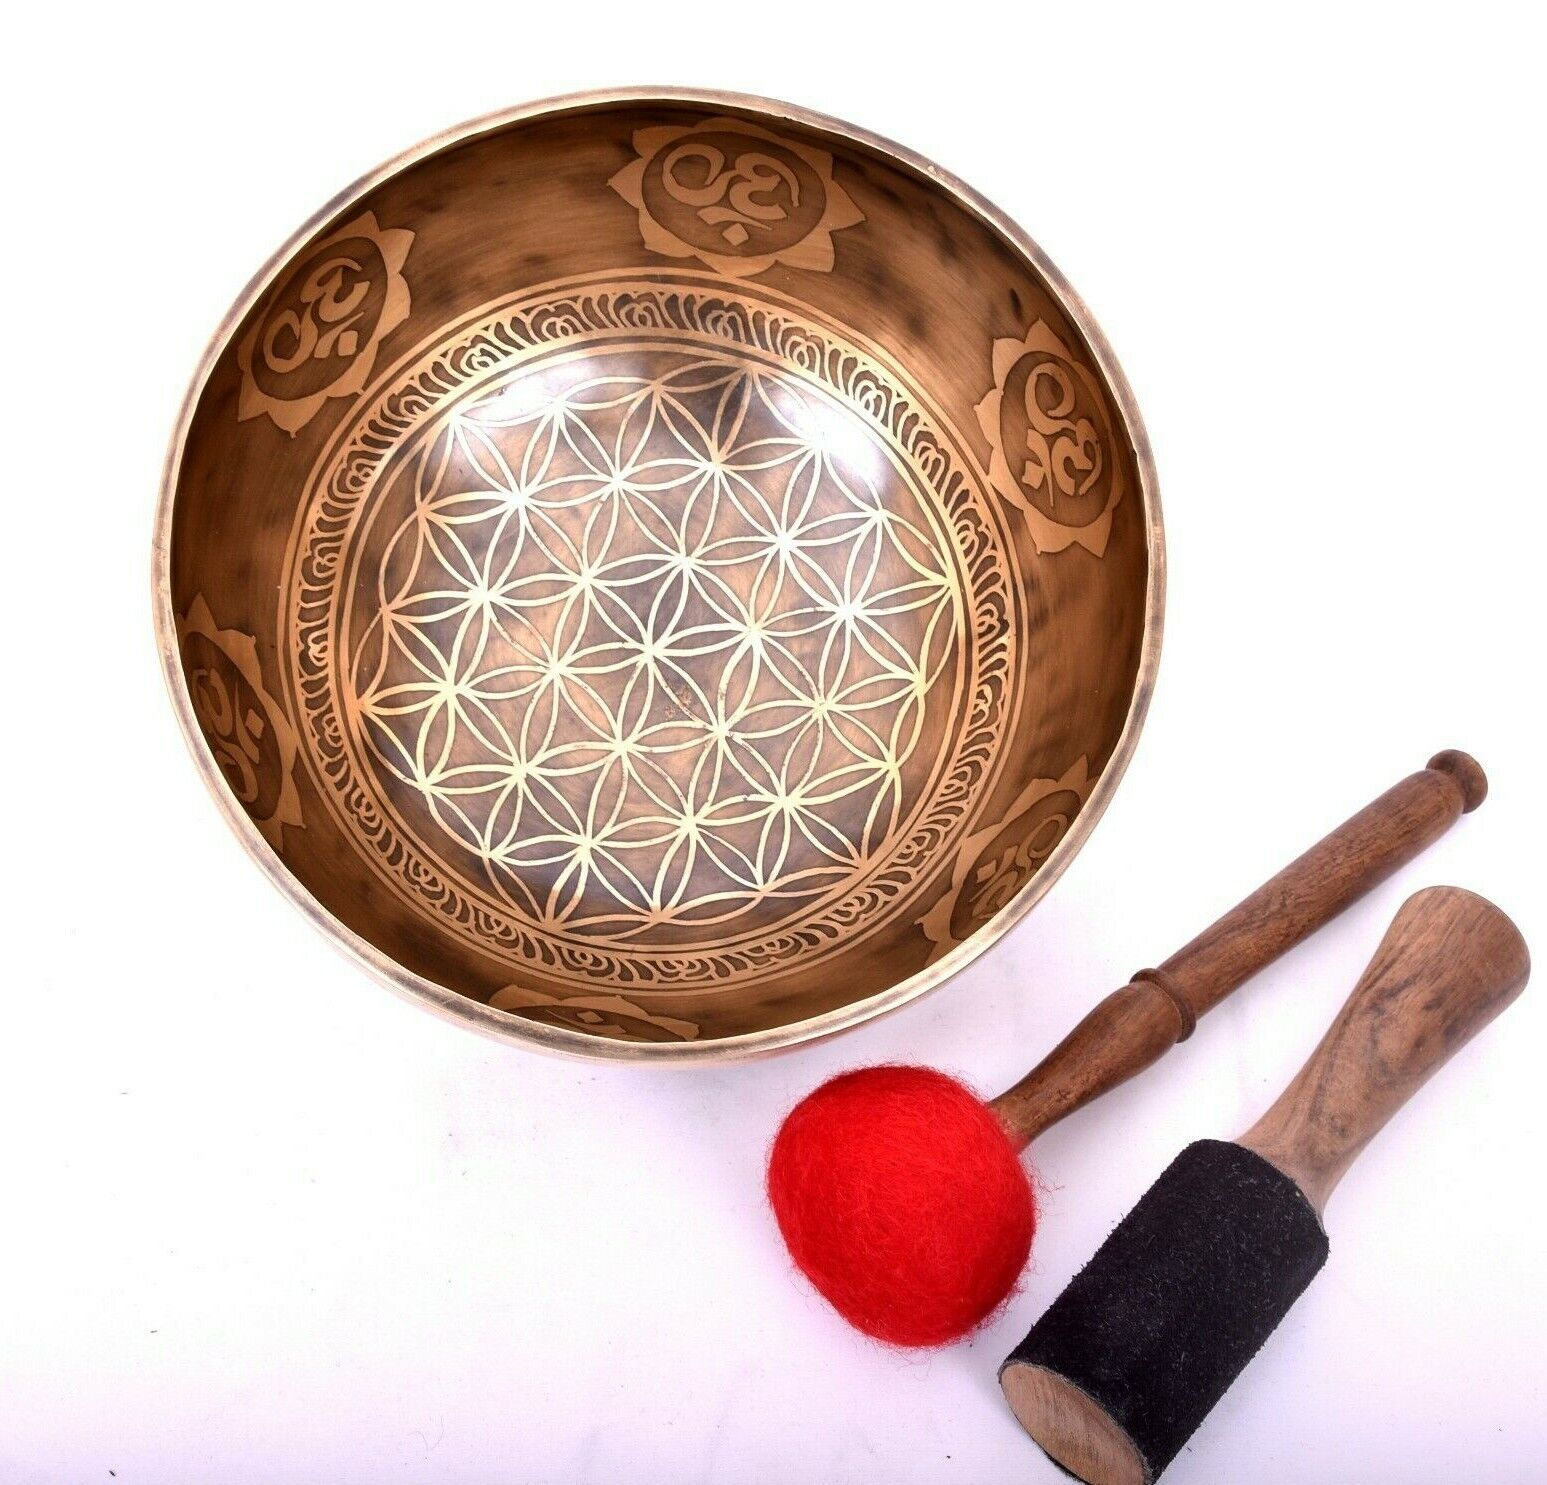 9 Inches Flower Of Life Carving Singing Bowl - Tibetan Full Mantra Singing Bowl